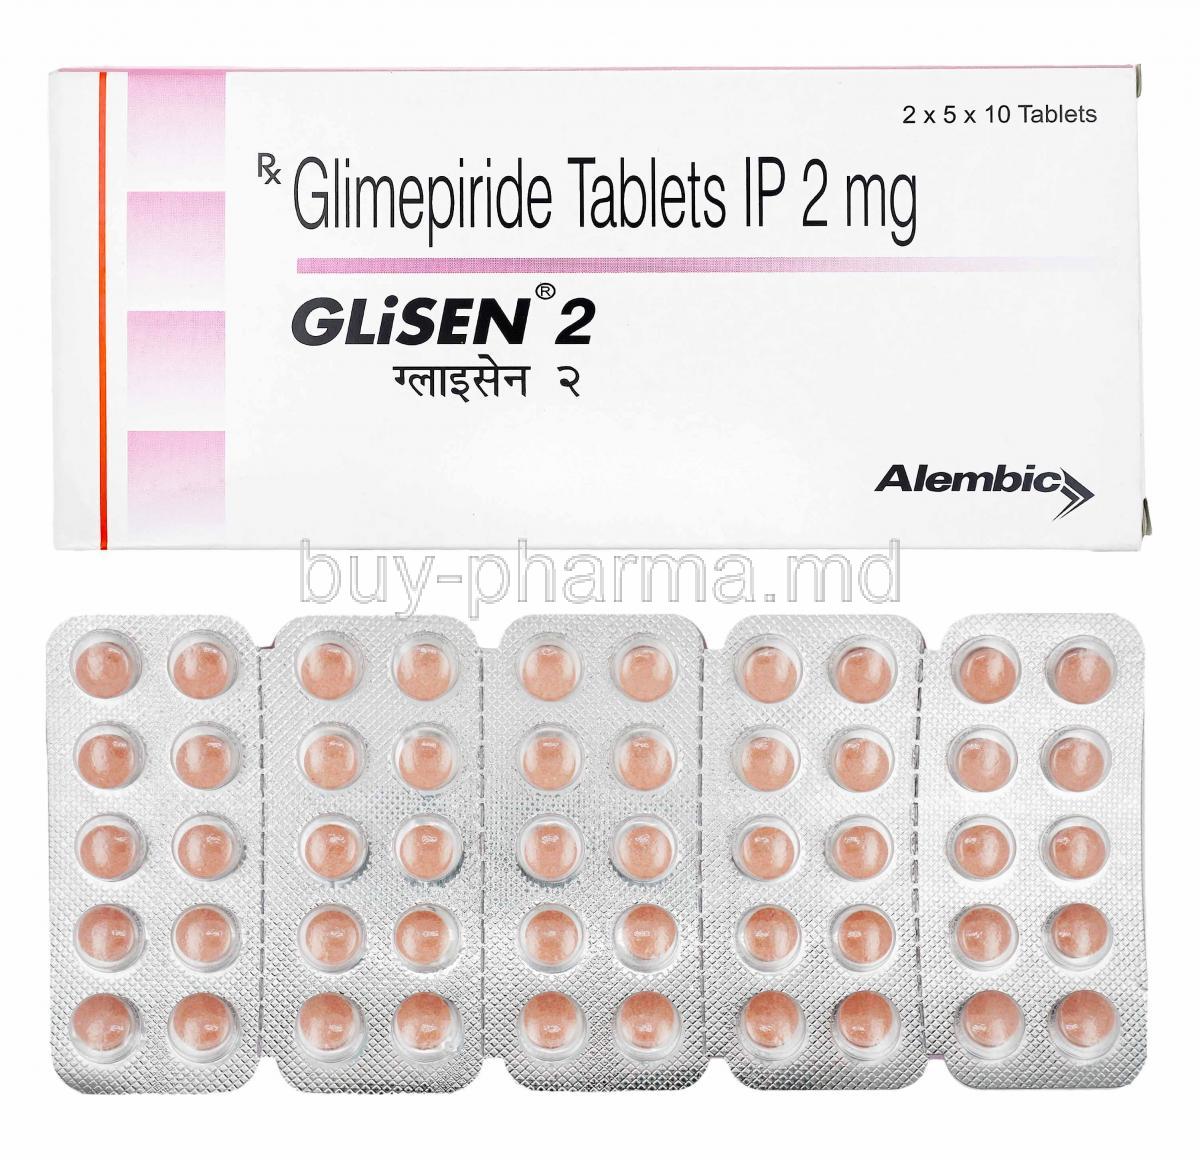 Glisen, Glimepiride 2mg box and tablets